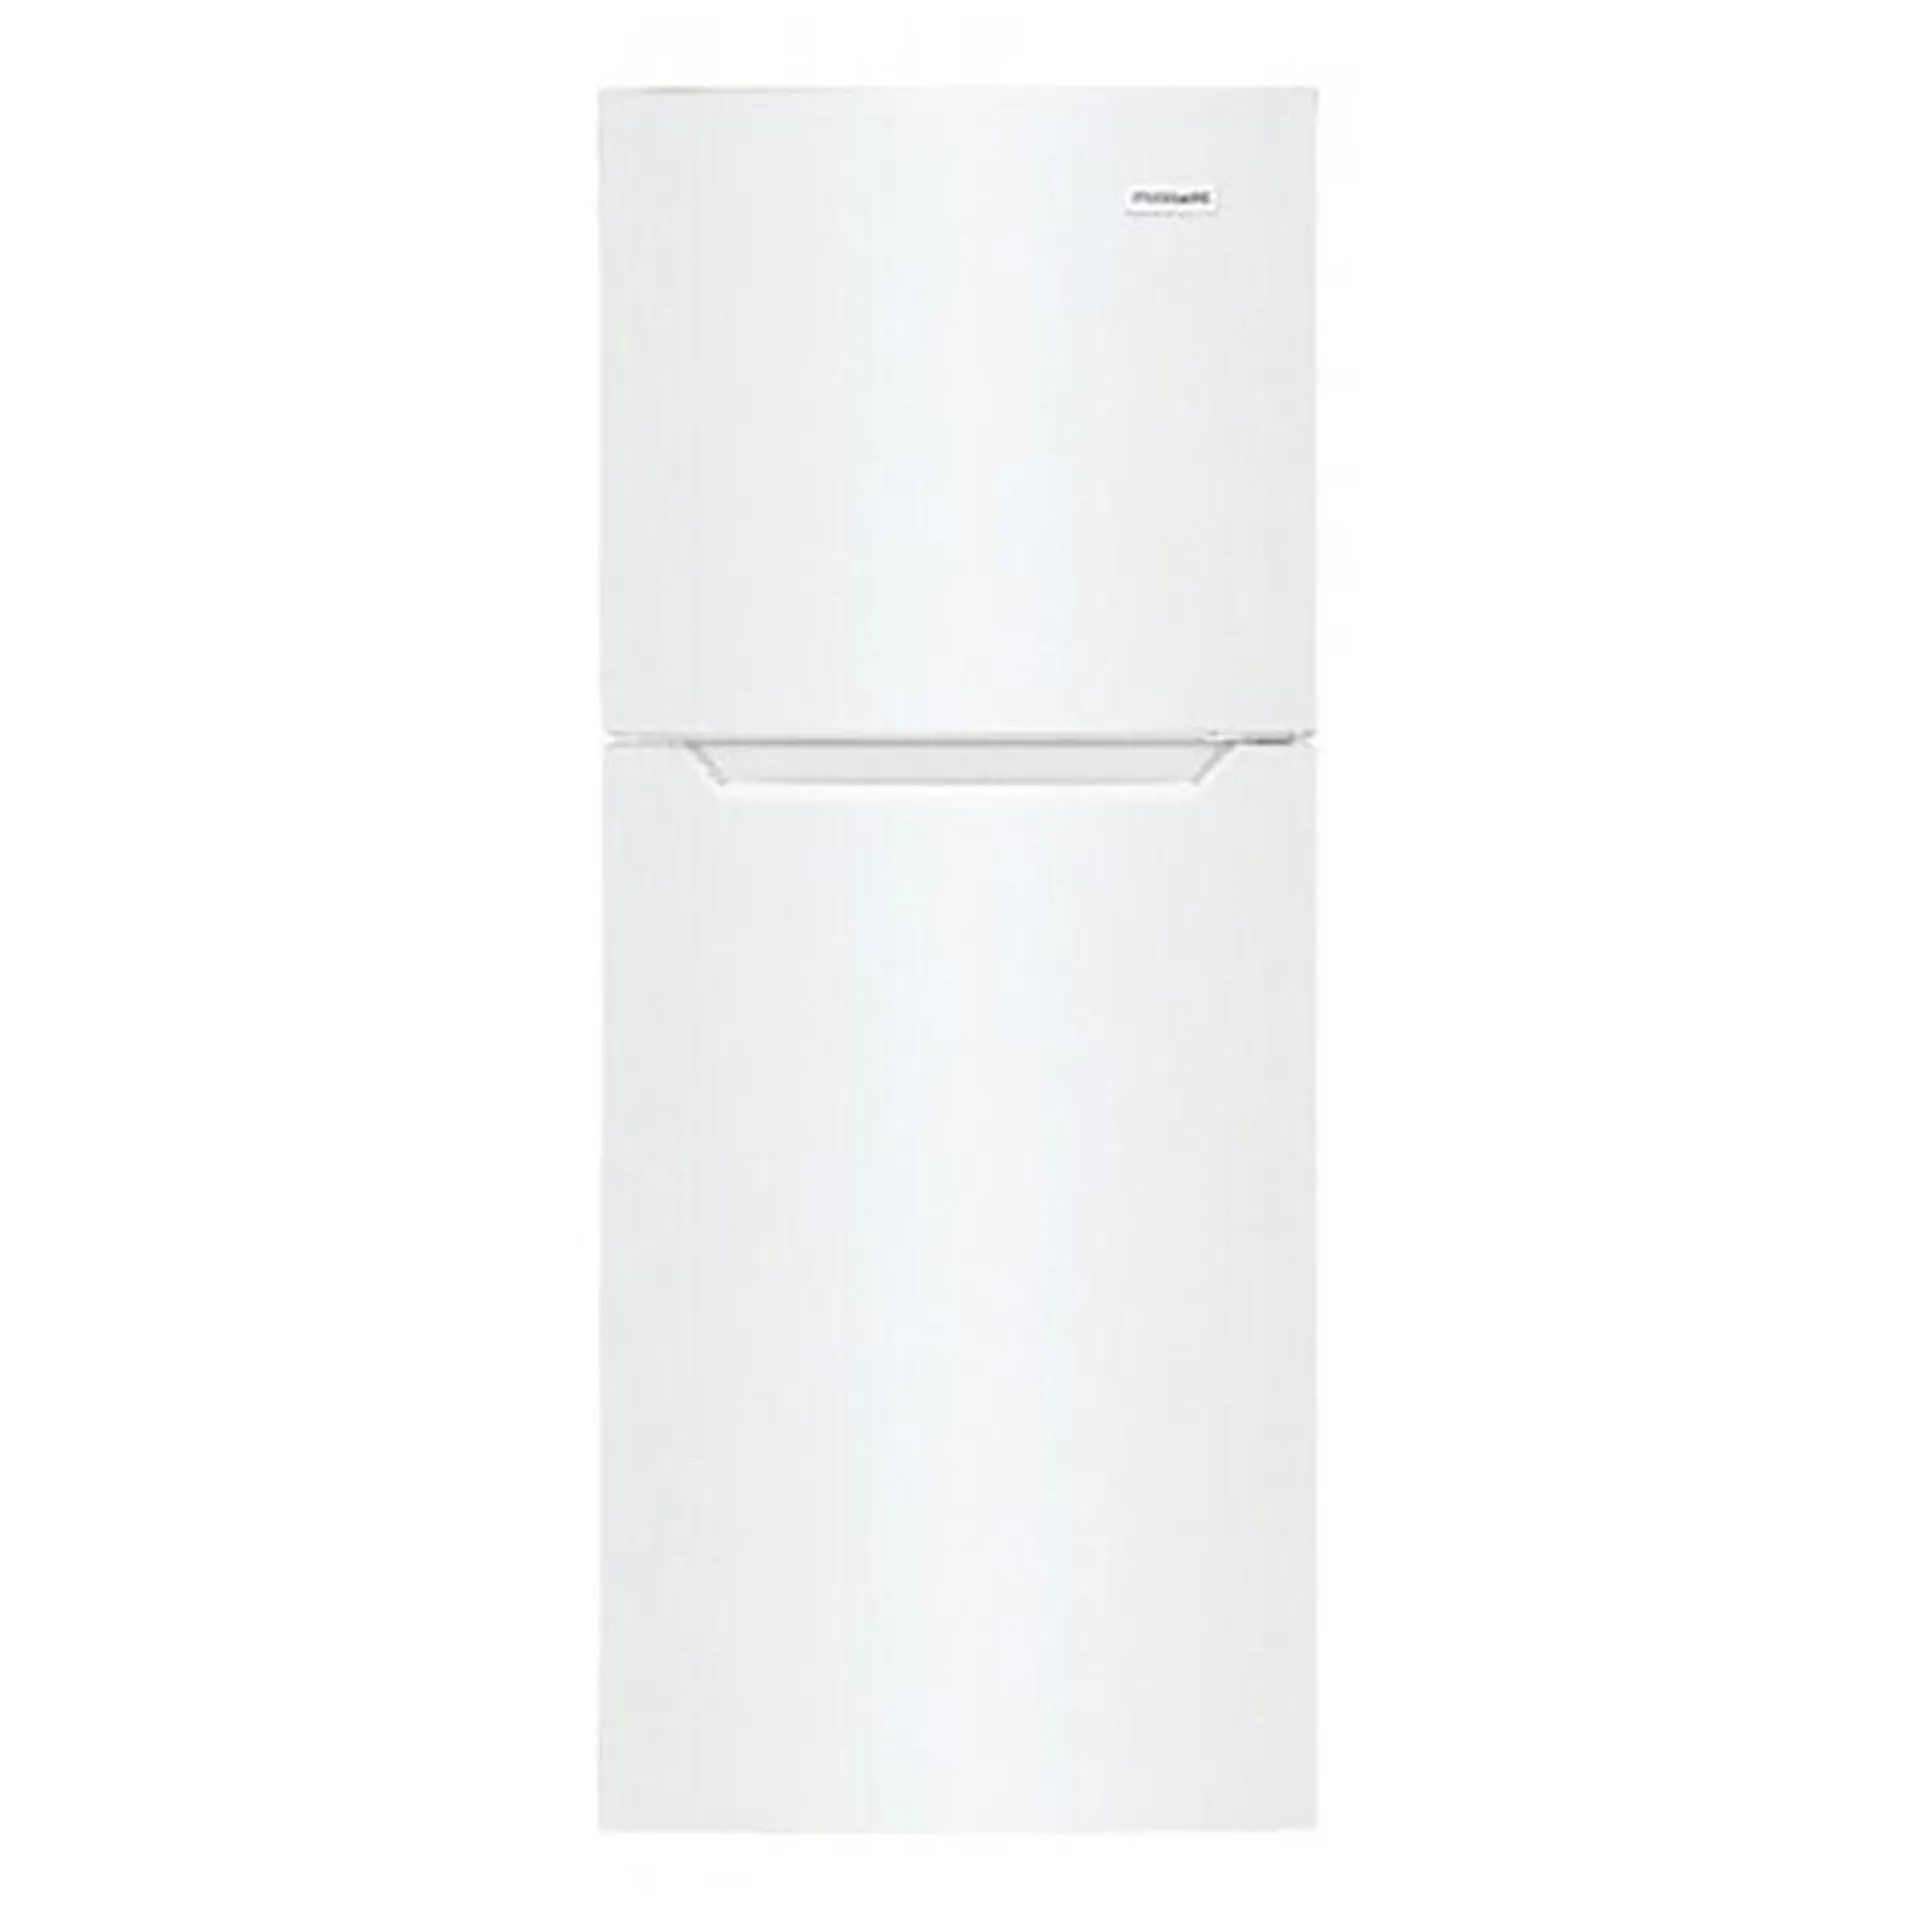 Frigidaire 24 in. 9.9 cu. ft. Counter Depth Top Freezer Refrigerator - White